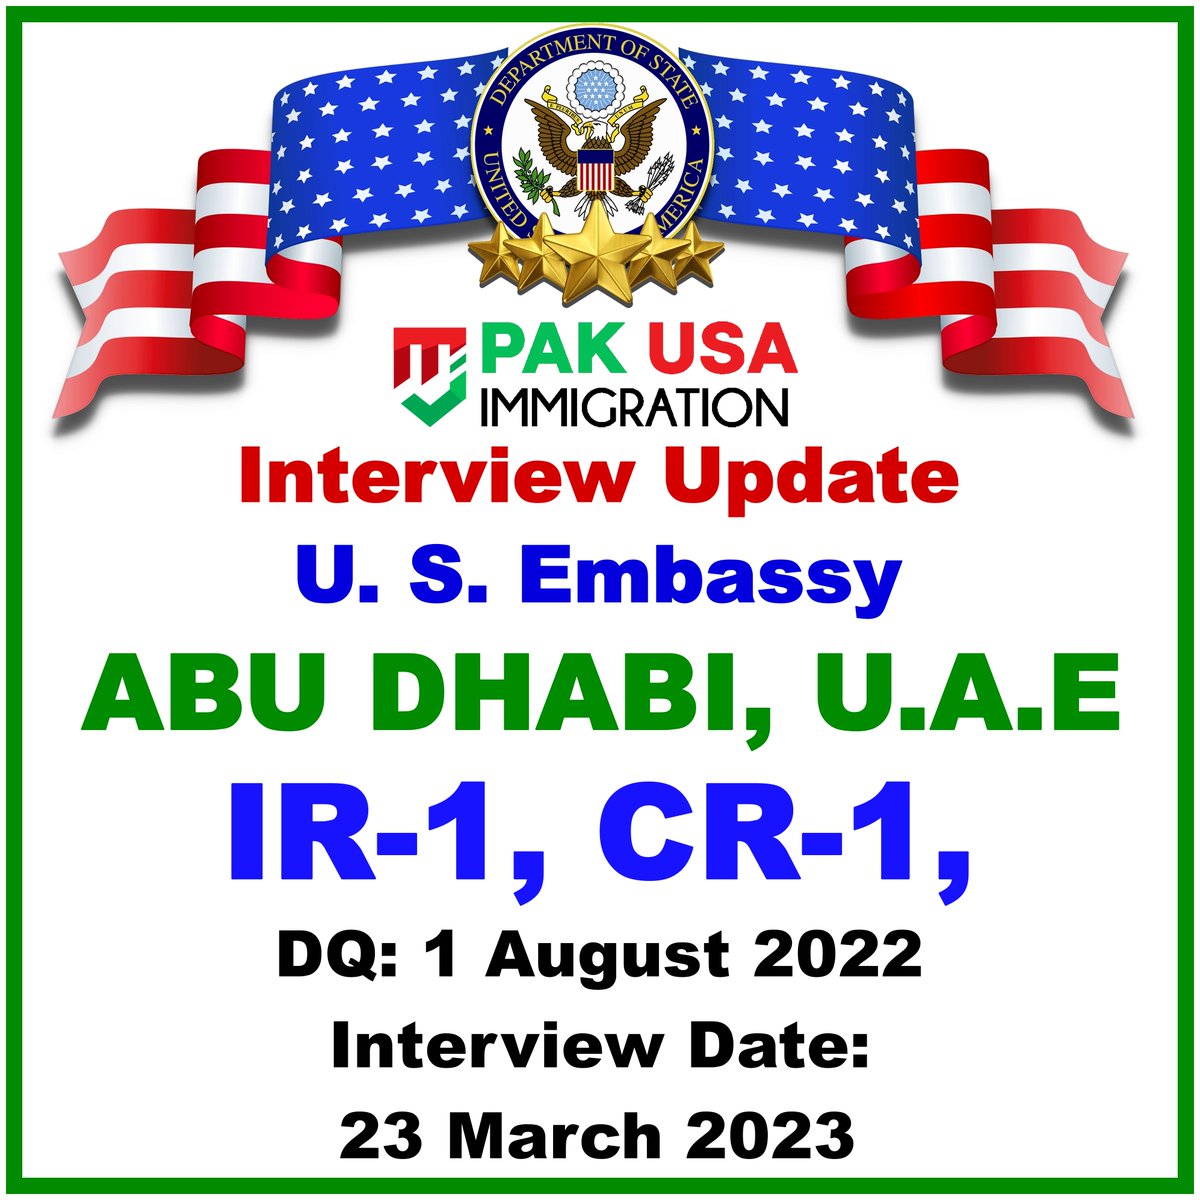 US Embassy ABU DHABI - U.A.E - IR-1 Interview Letters Update

#usimmigration #PakUSAImmigration #F2A #FX1 #F2B #F2avisa #F3Visa #F4Visa #IR1 #CR1 #IR5 #USCIS #NVC #immigrationconsultant #US #usa #USEmbassy #USEmbassyISB #USEmbassyAbuDhabi